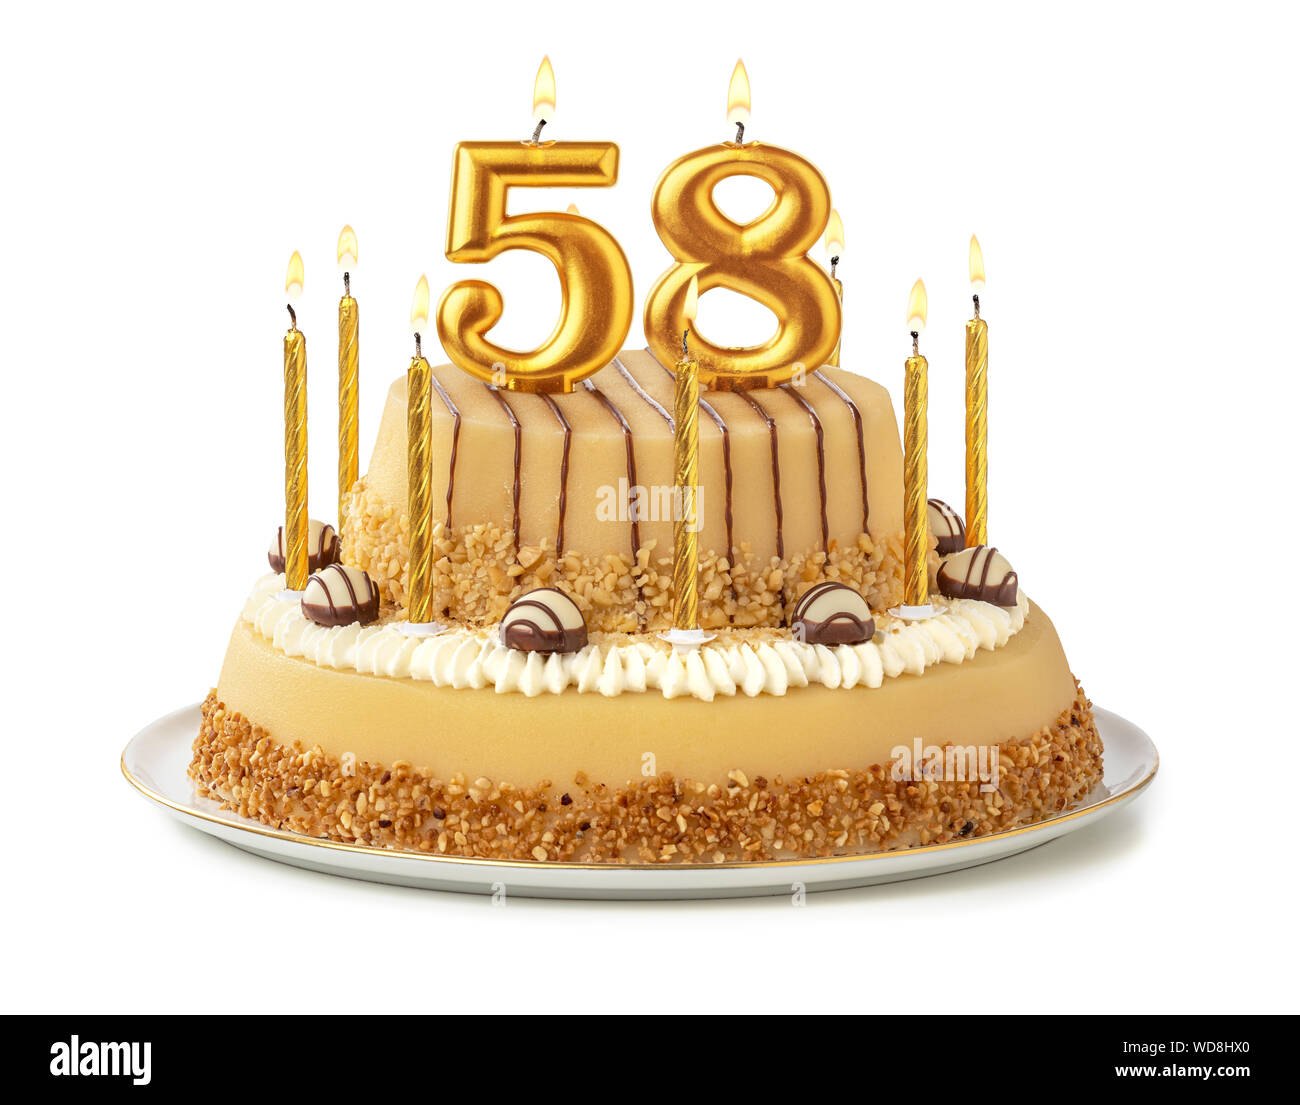 Torta Festiva con velas de oro - número 58 Fotografía de stock - Alamy